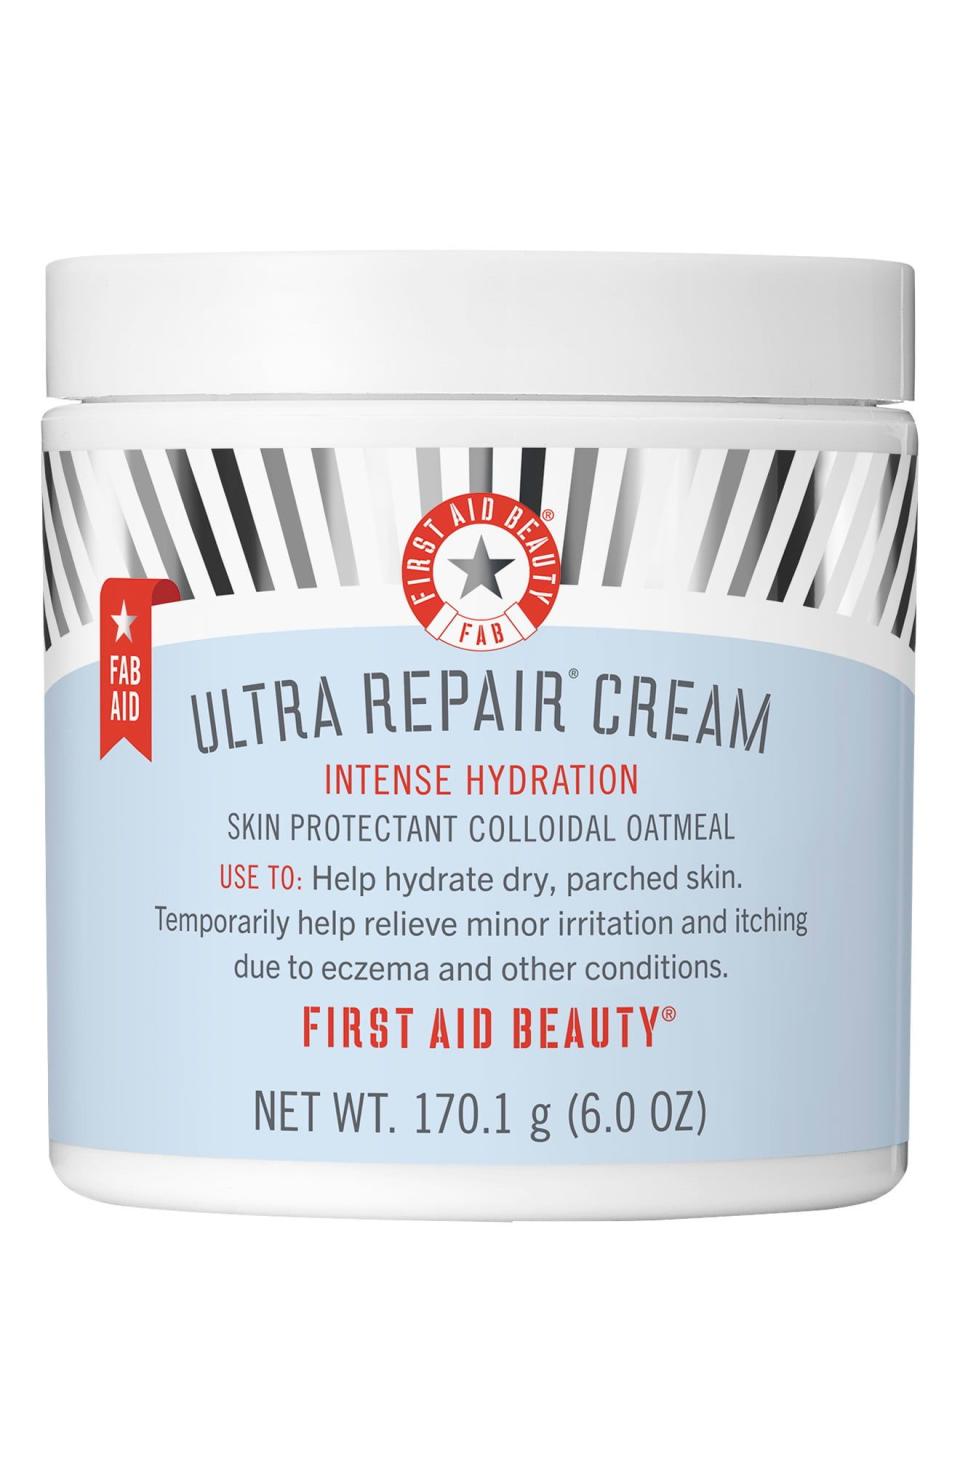 9) Ultra Repair Cream Intense Hydration Face & Body Moisturizer